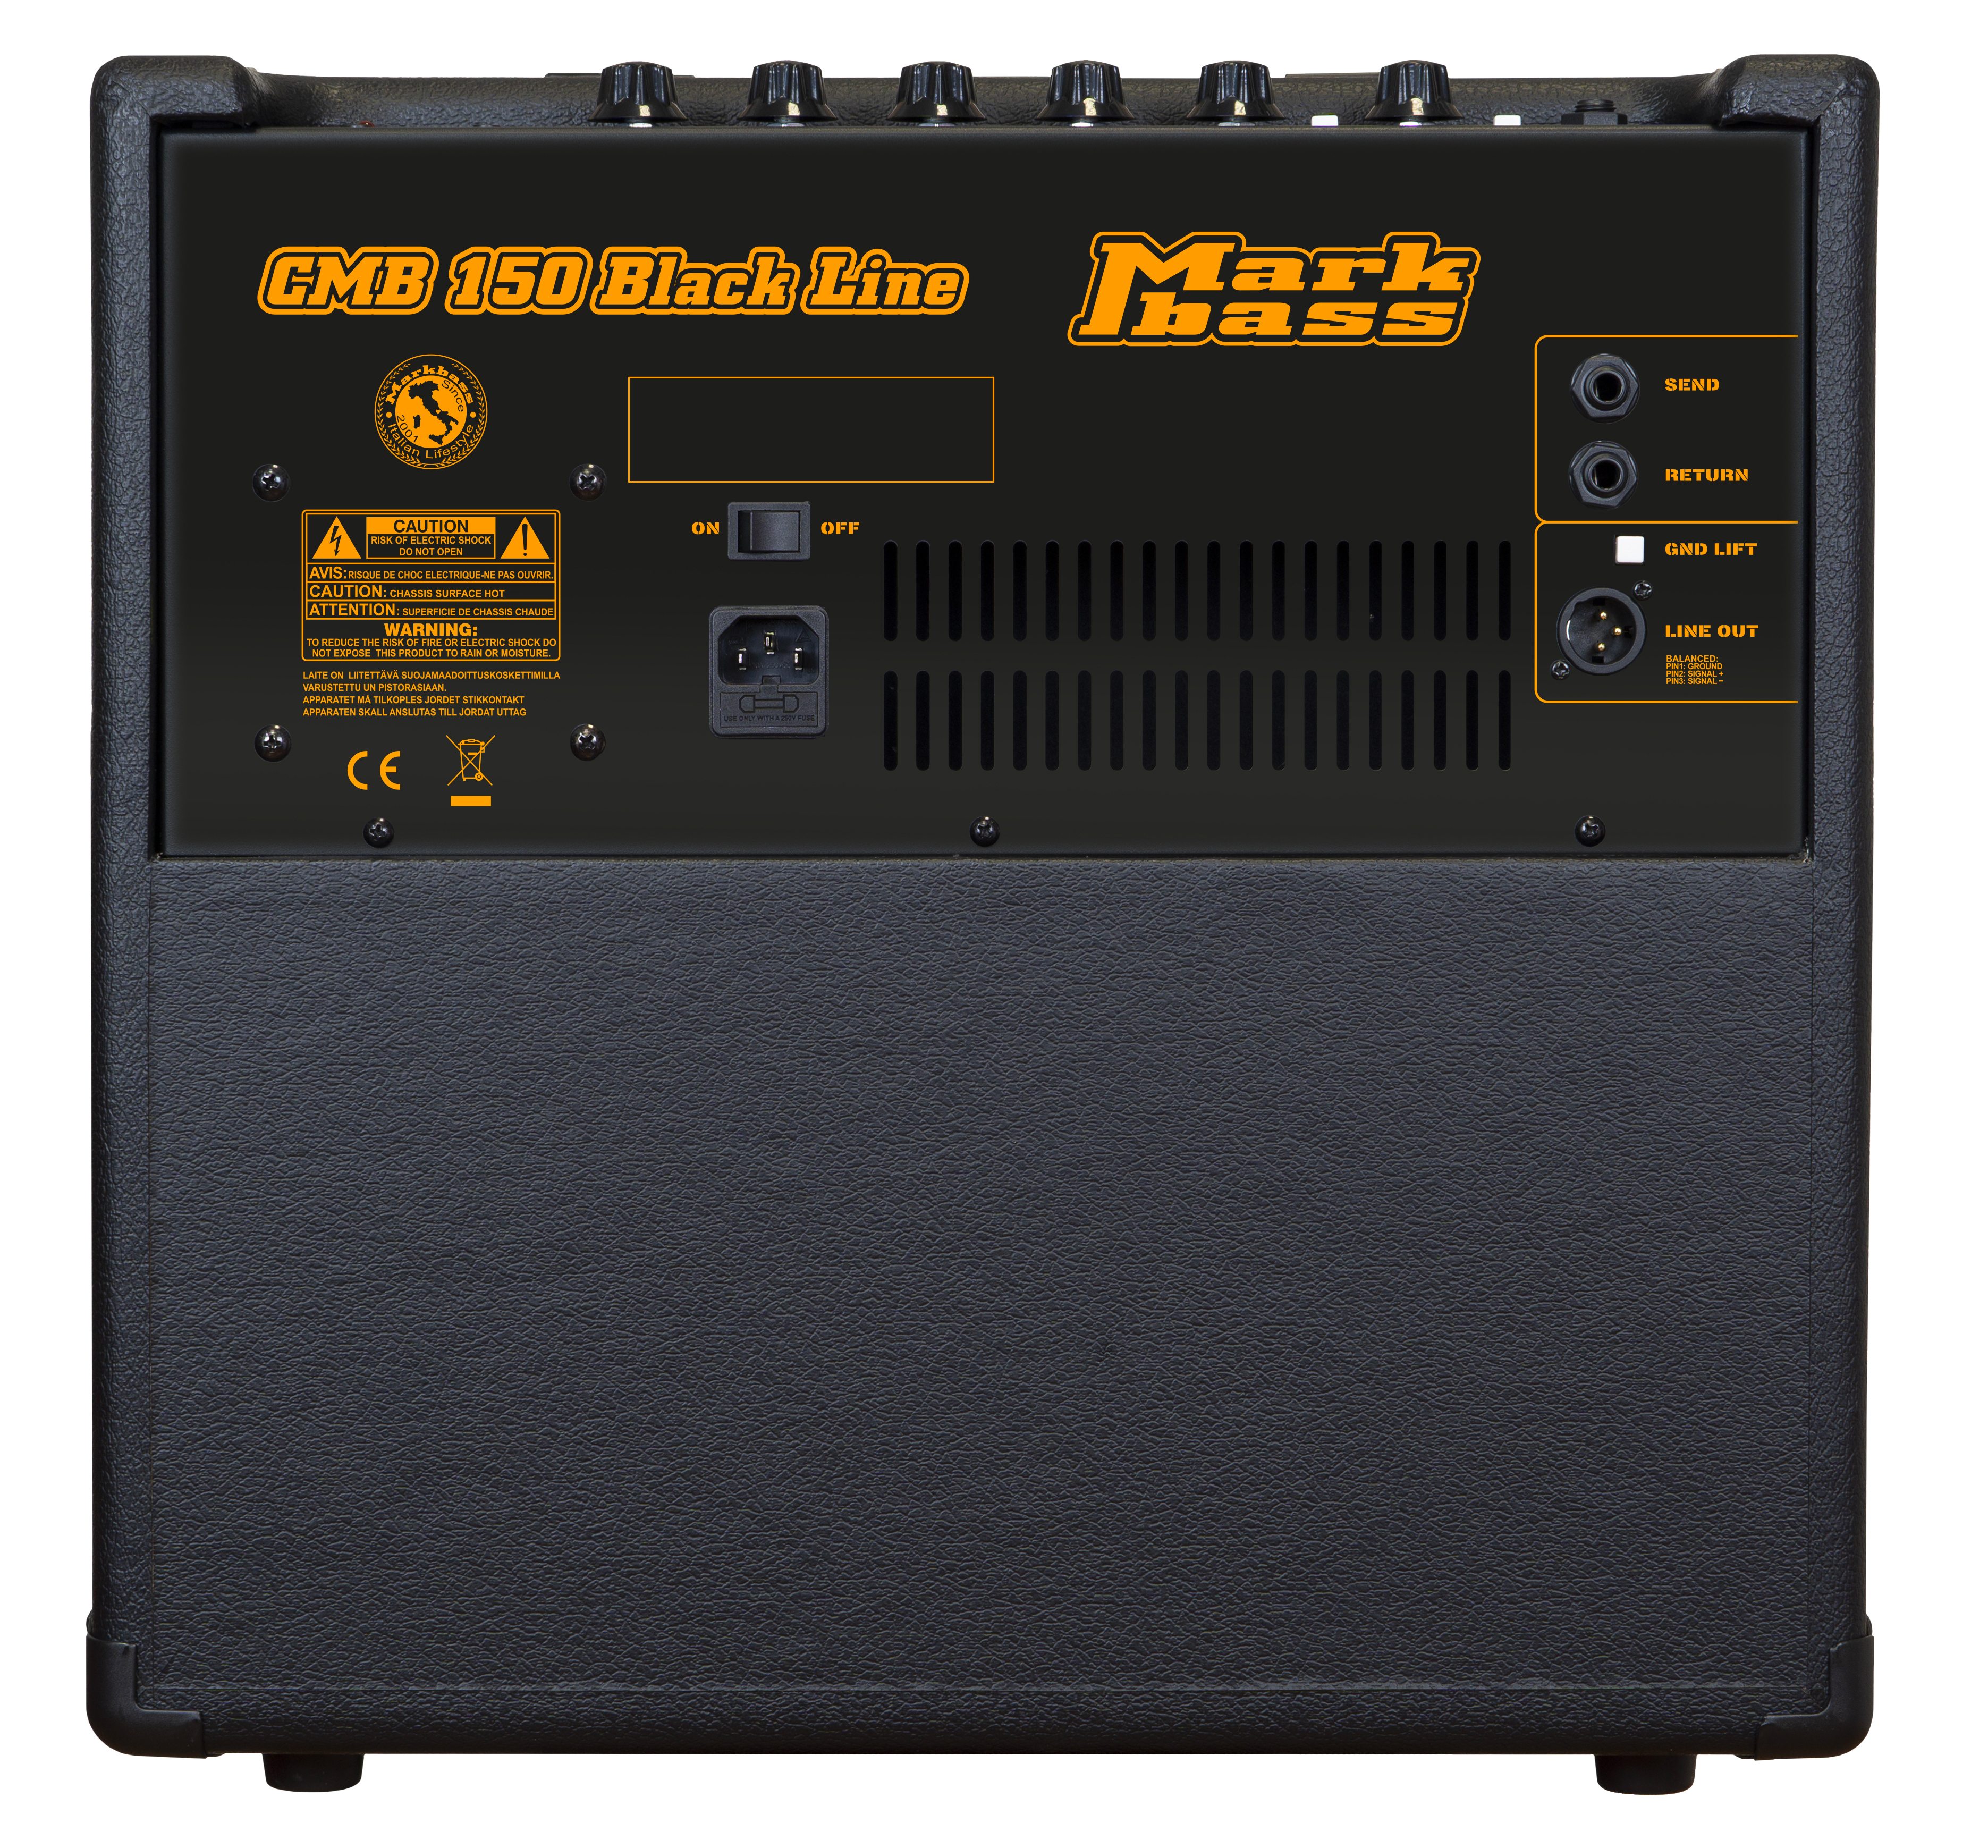 Markbass Cmb 121 Black Line Combo 150w 1x12 - Bass combo amp - Variation 2